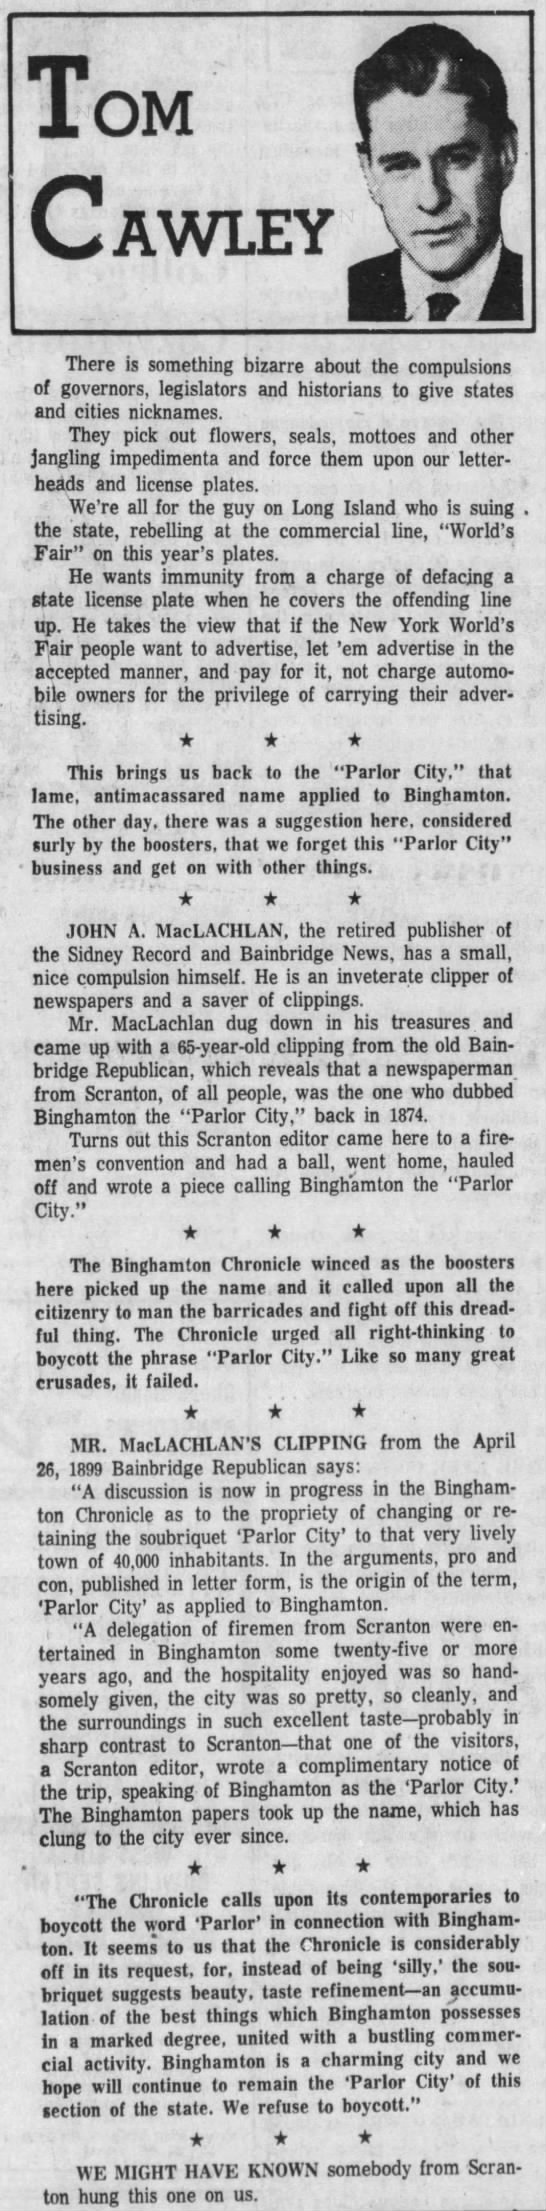 Binghamton's "Parlor City" nickname explained (1964). - 